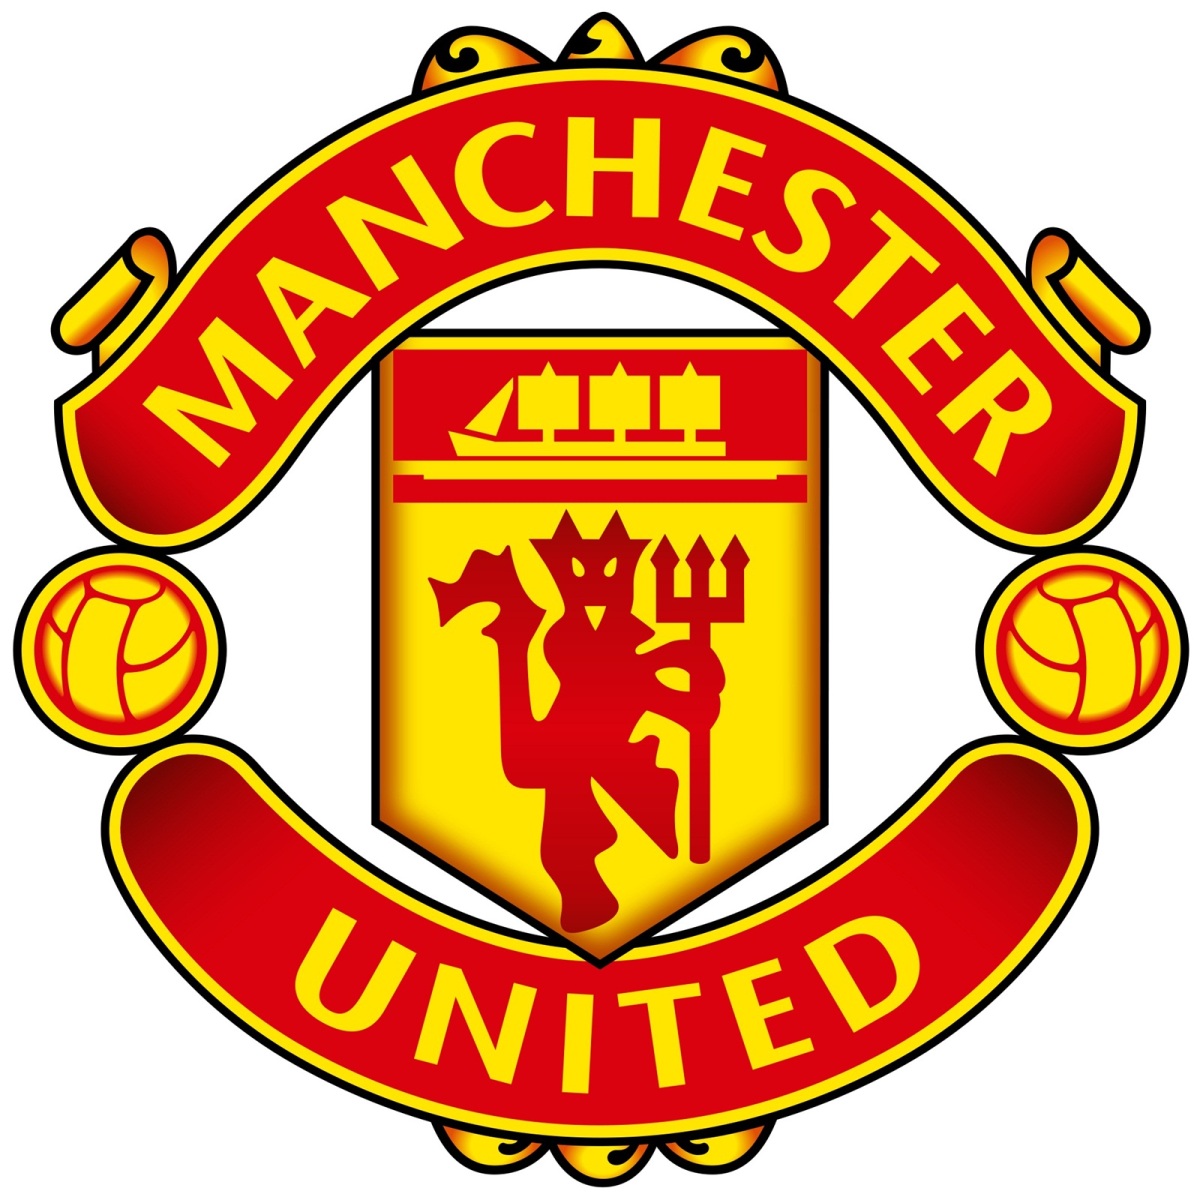 http://nowplayingky.files.wordpress.com/2012/12/manchester-united-logo.jpg?w=1200